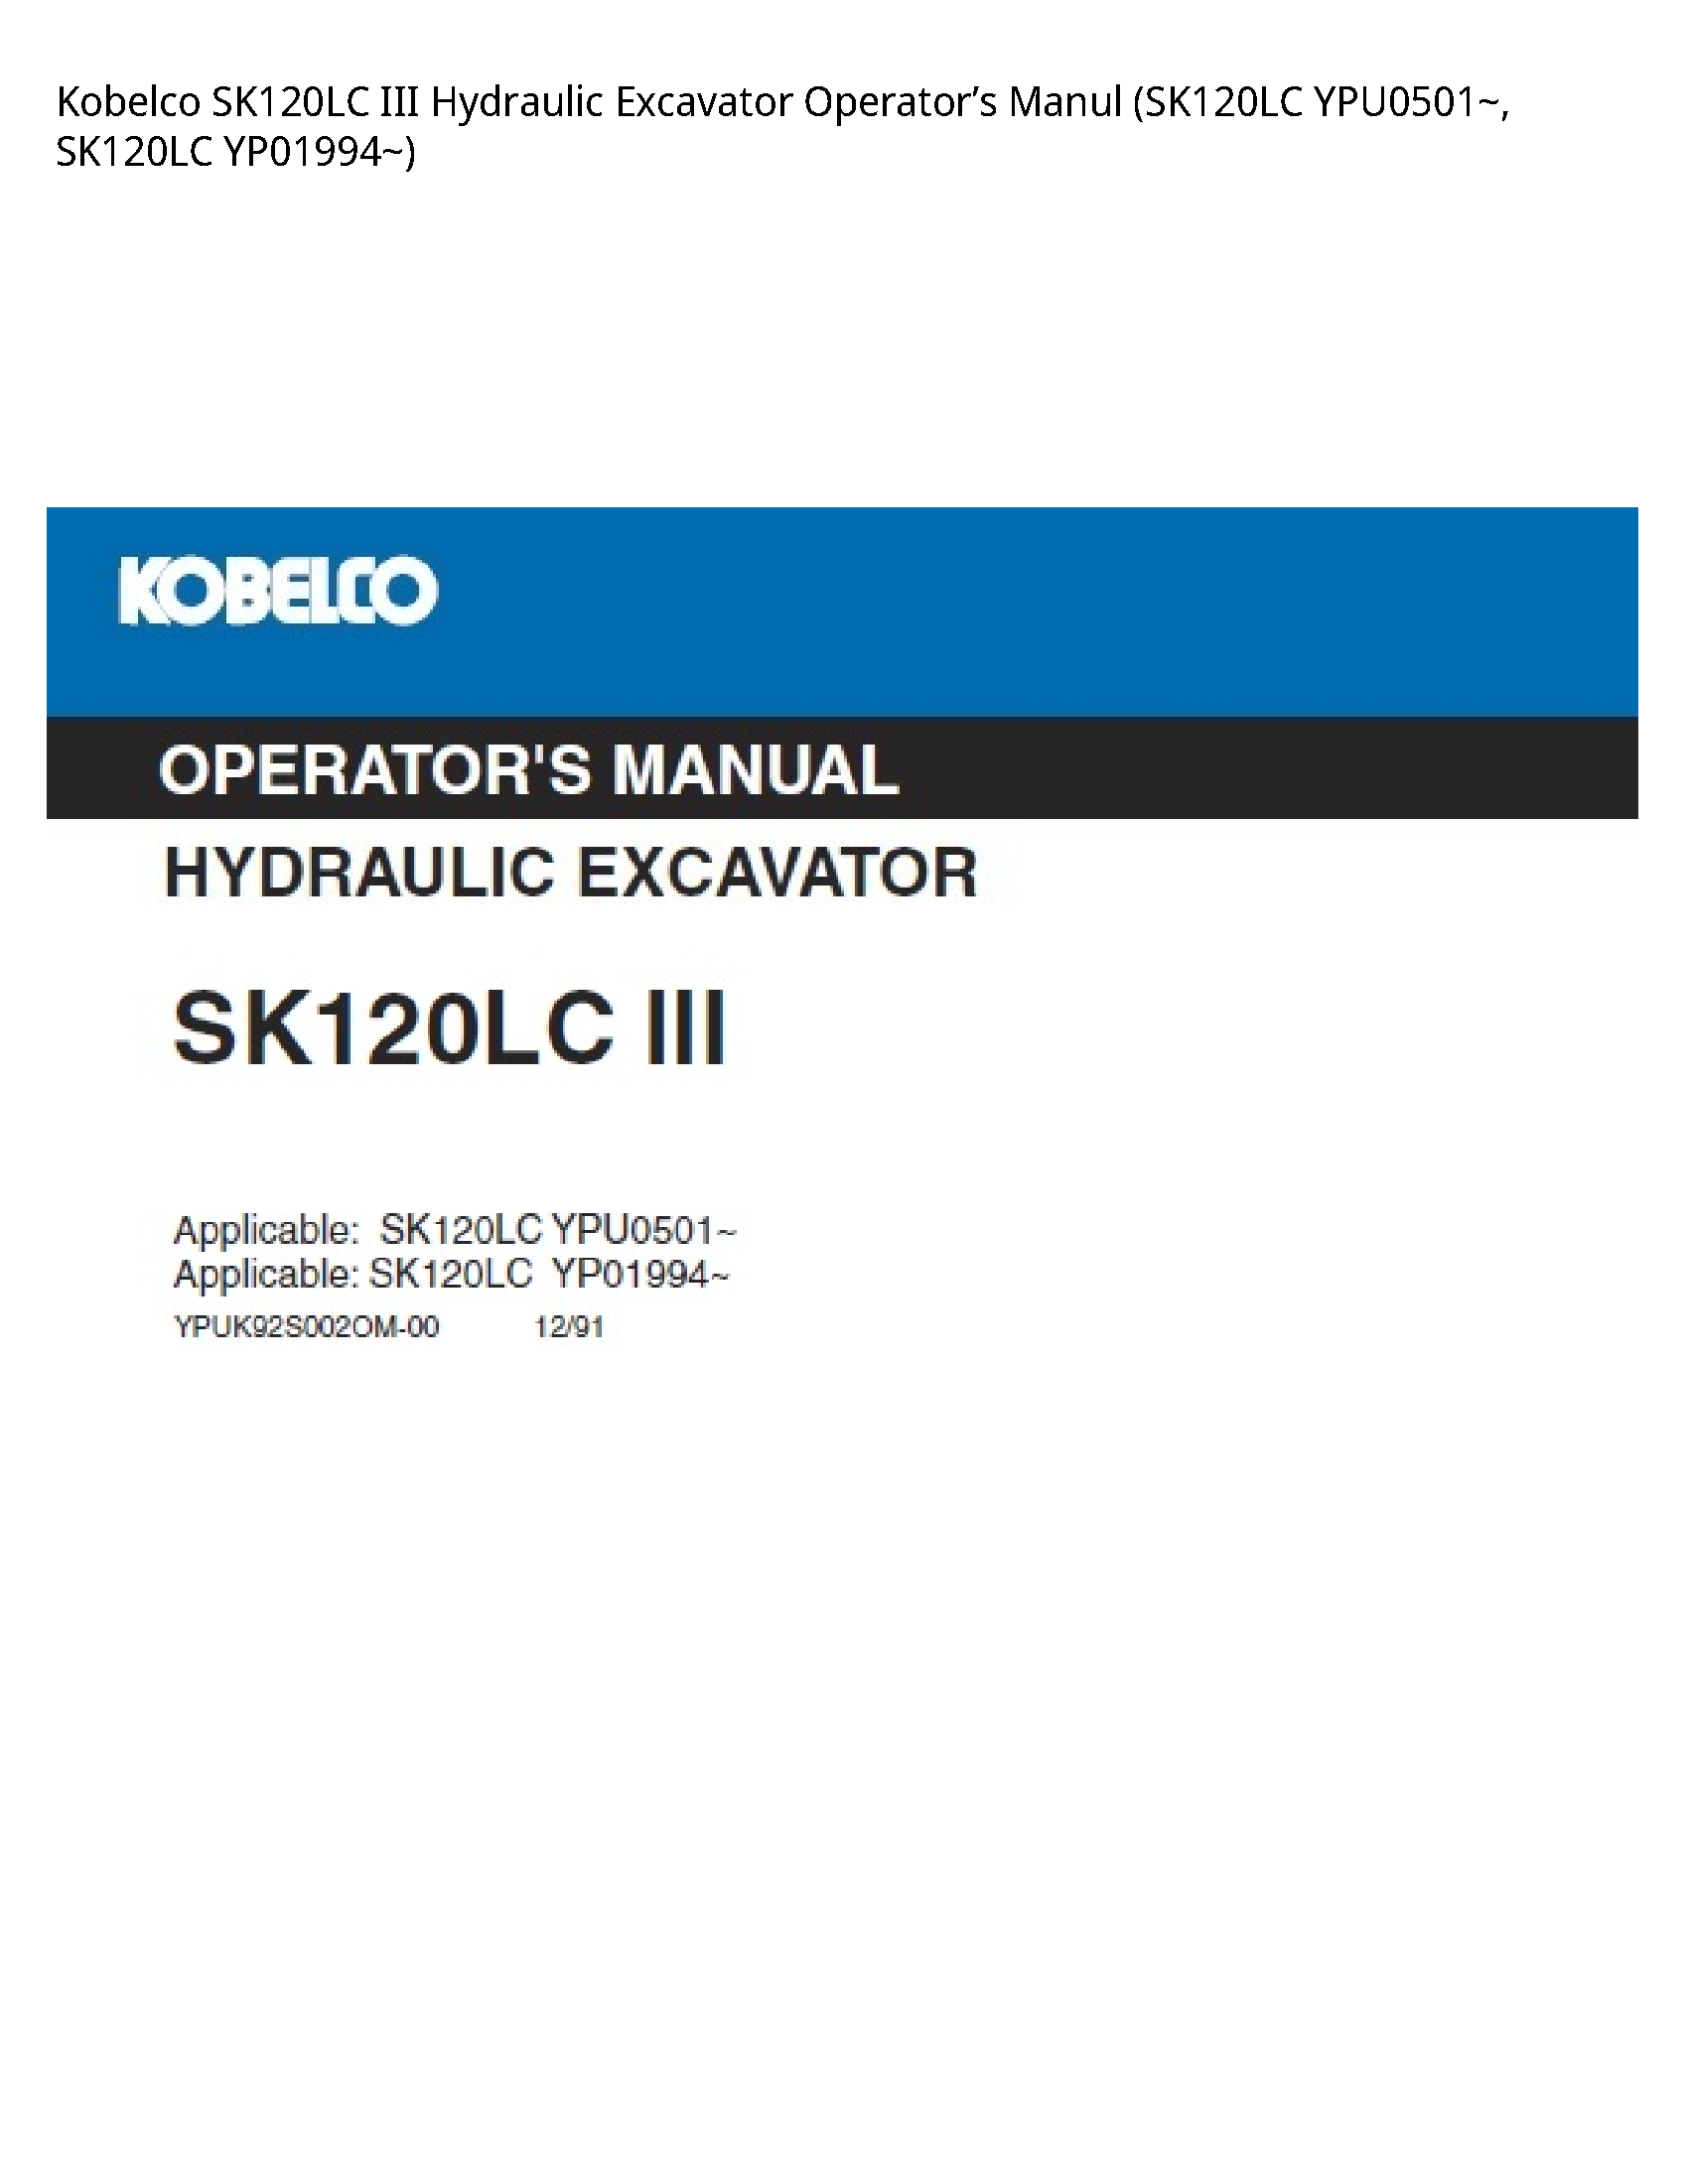 Kobelco SK120LC III Hydraulic Excavator Operator’s Manul manual